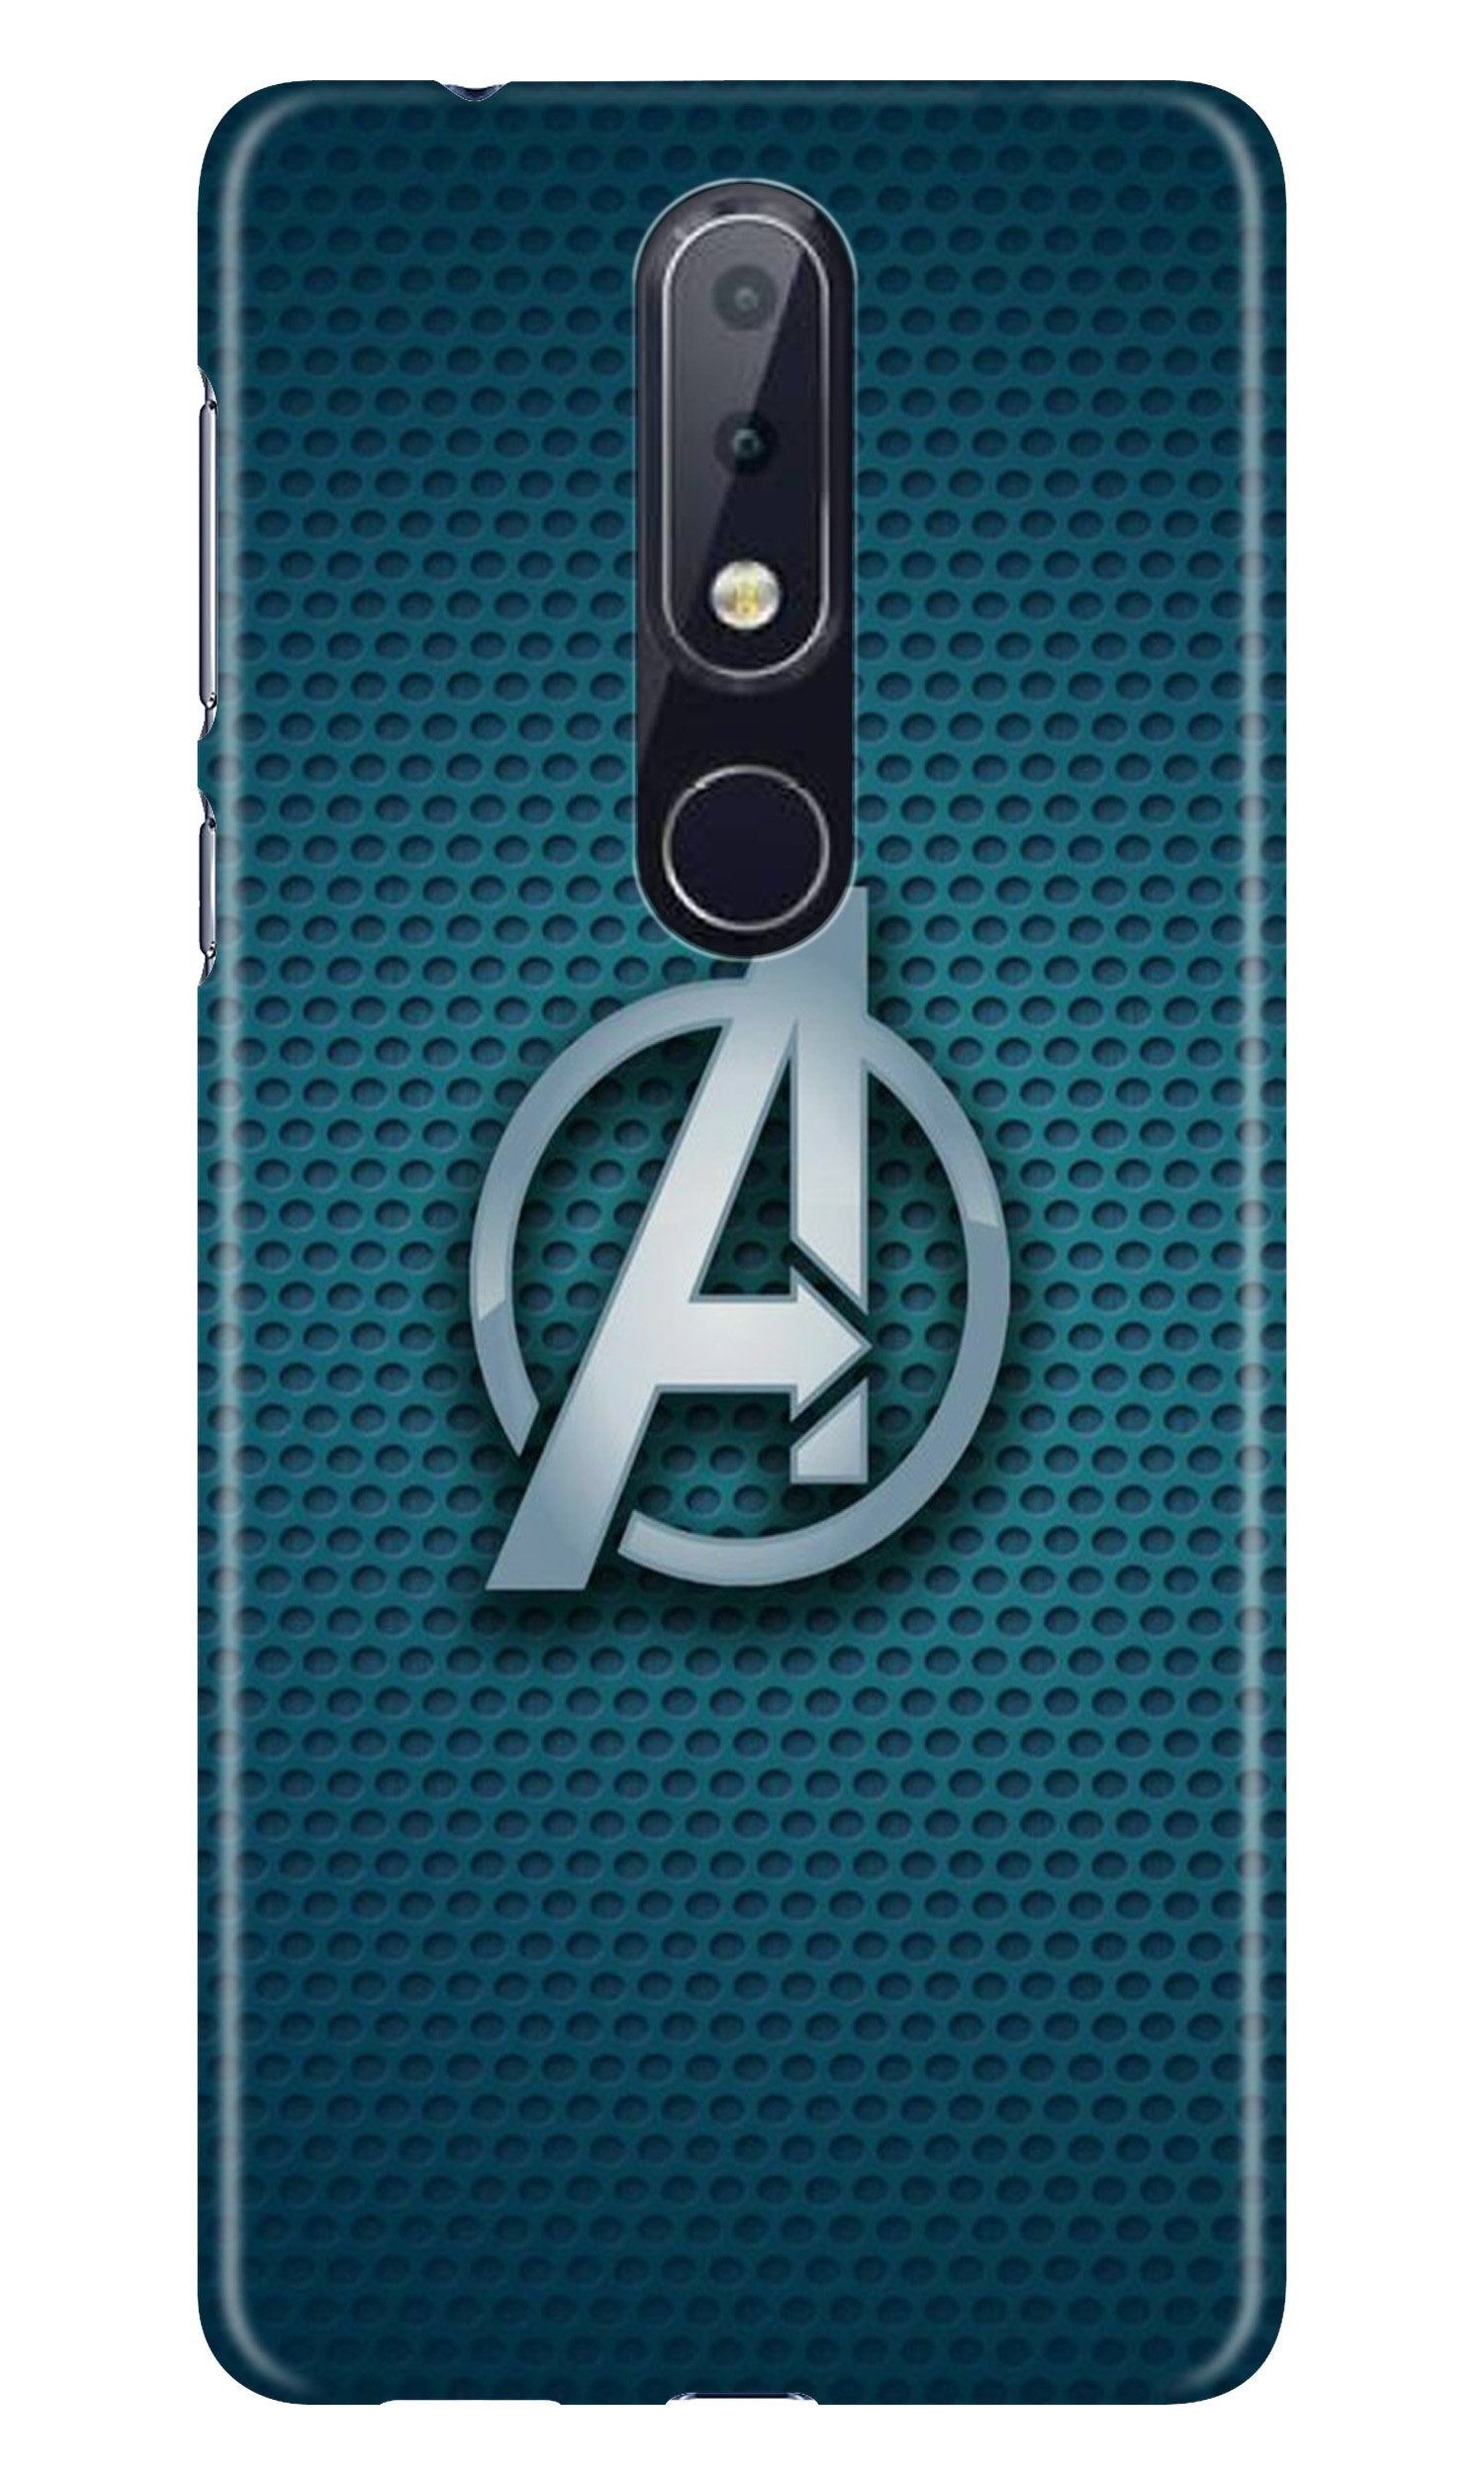 Avengers Case for Nokia 6.1 Plus (Design No. 246)